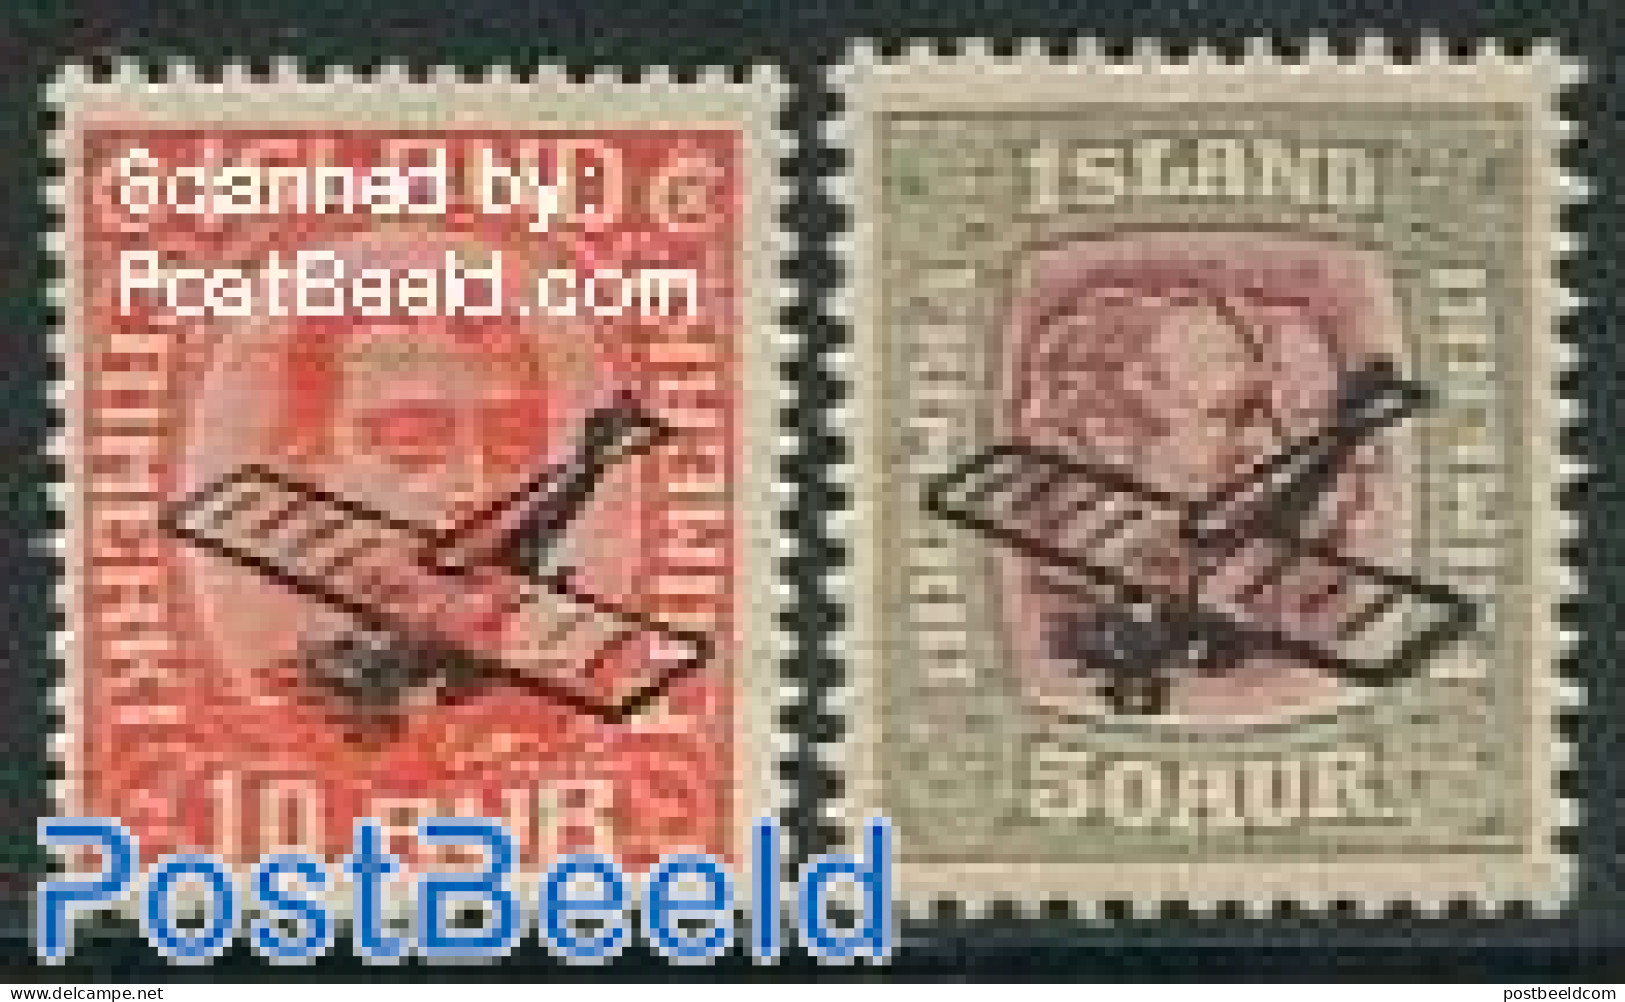 Iceland 1928 Airmail Overprints 2v, Unused (hinged), Transport - Aircraft & Aviation - Unused Stamps